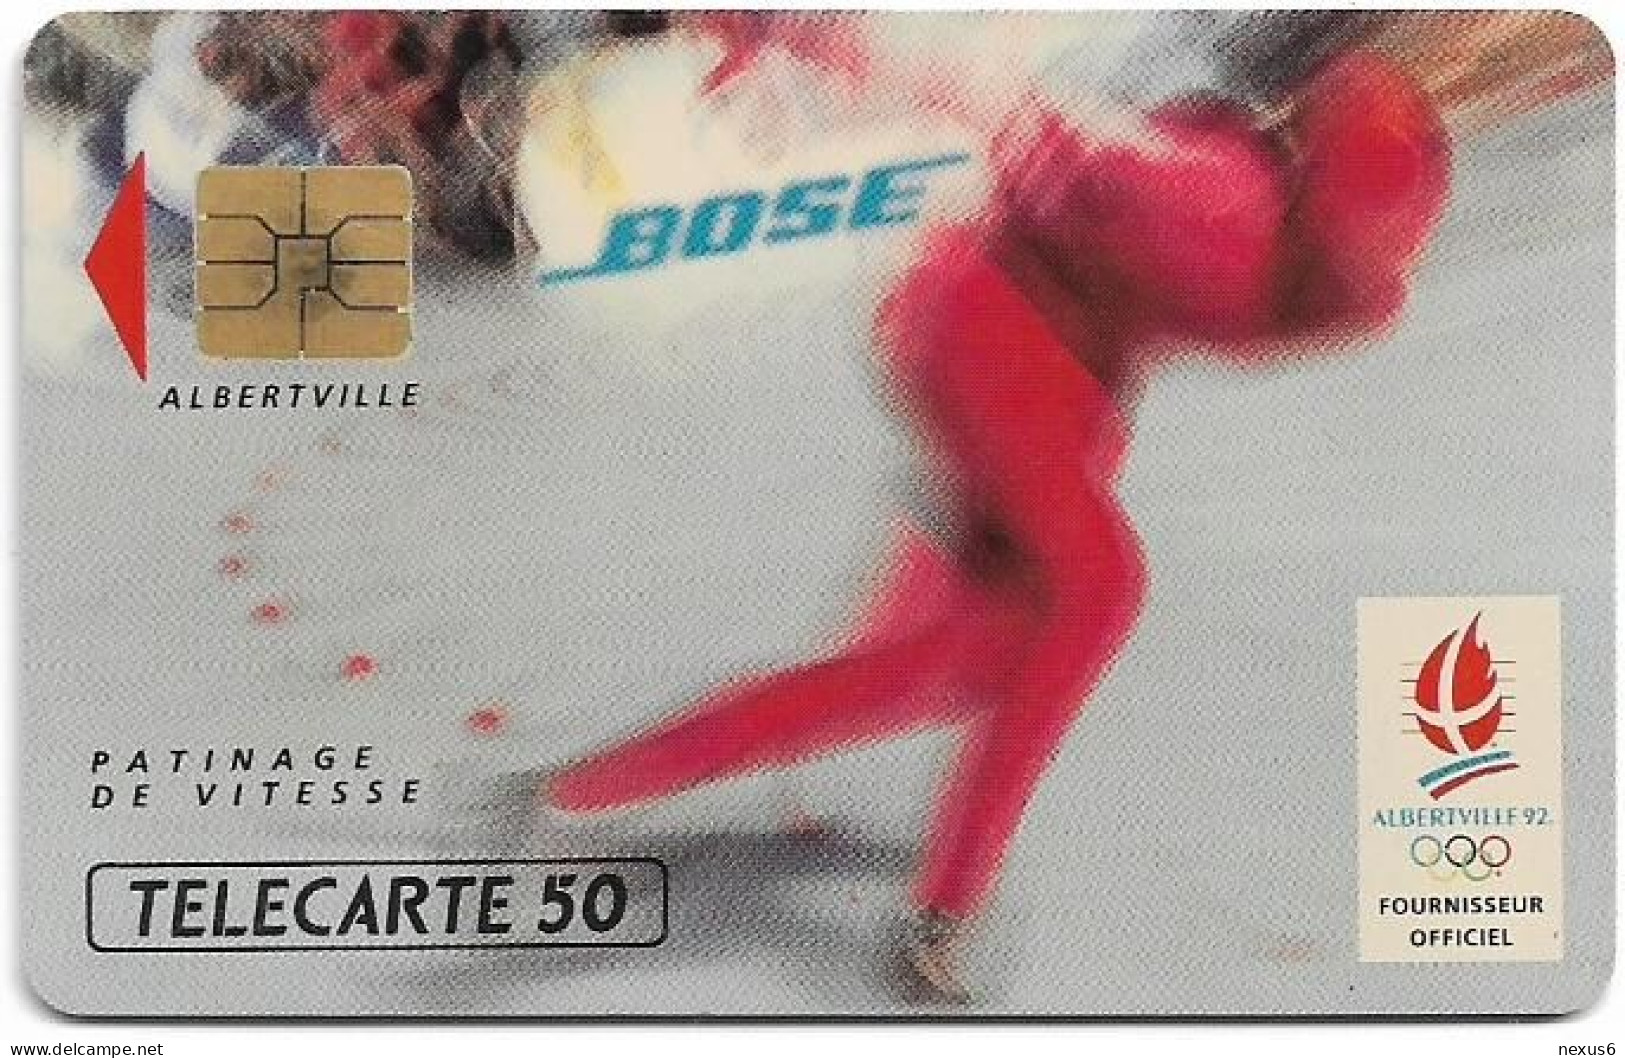 France - 0217 - Bose - Patinage De Vitesse, Solaic, 12.1991, 50Units, 111.000ex, Used - 1991